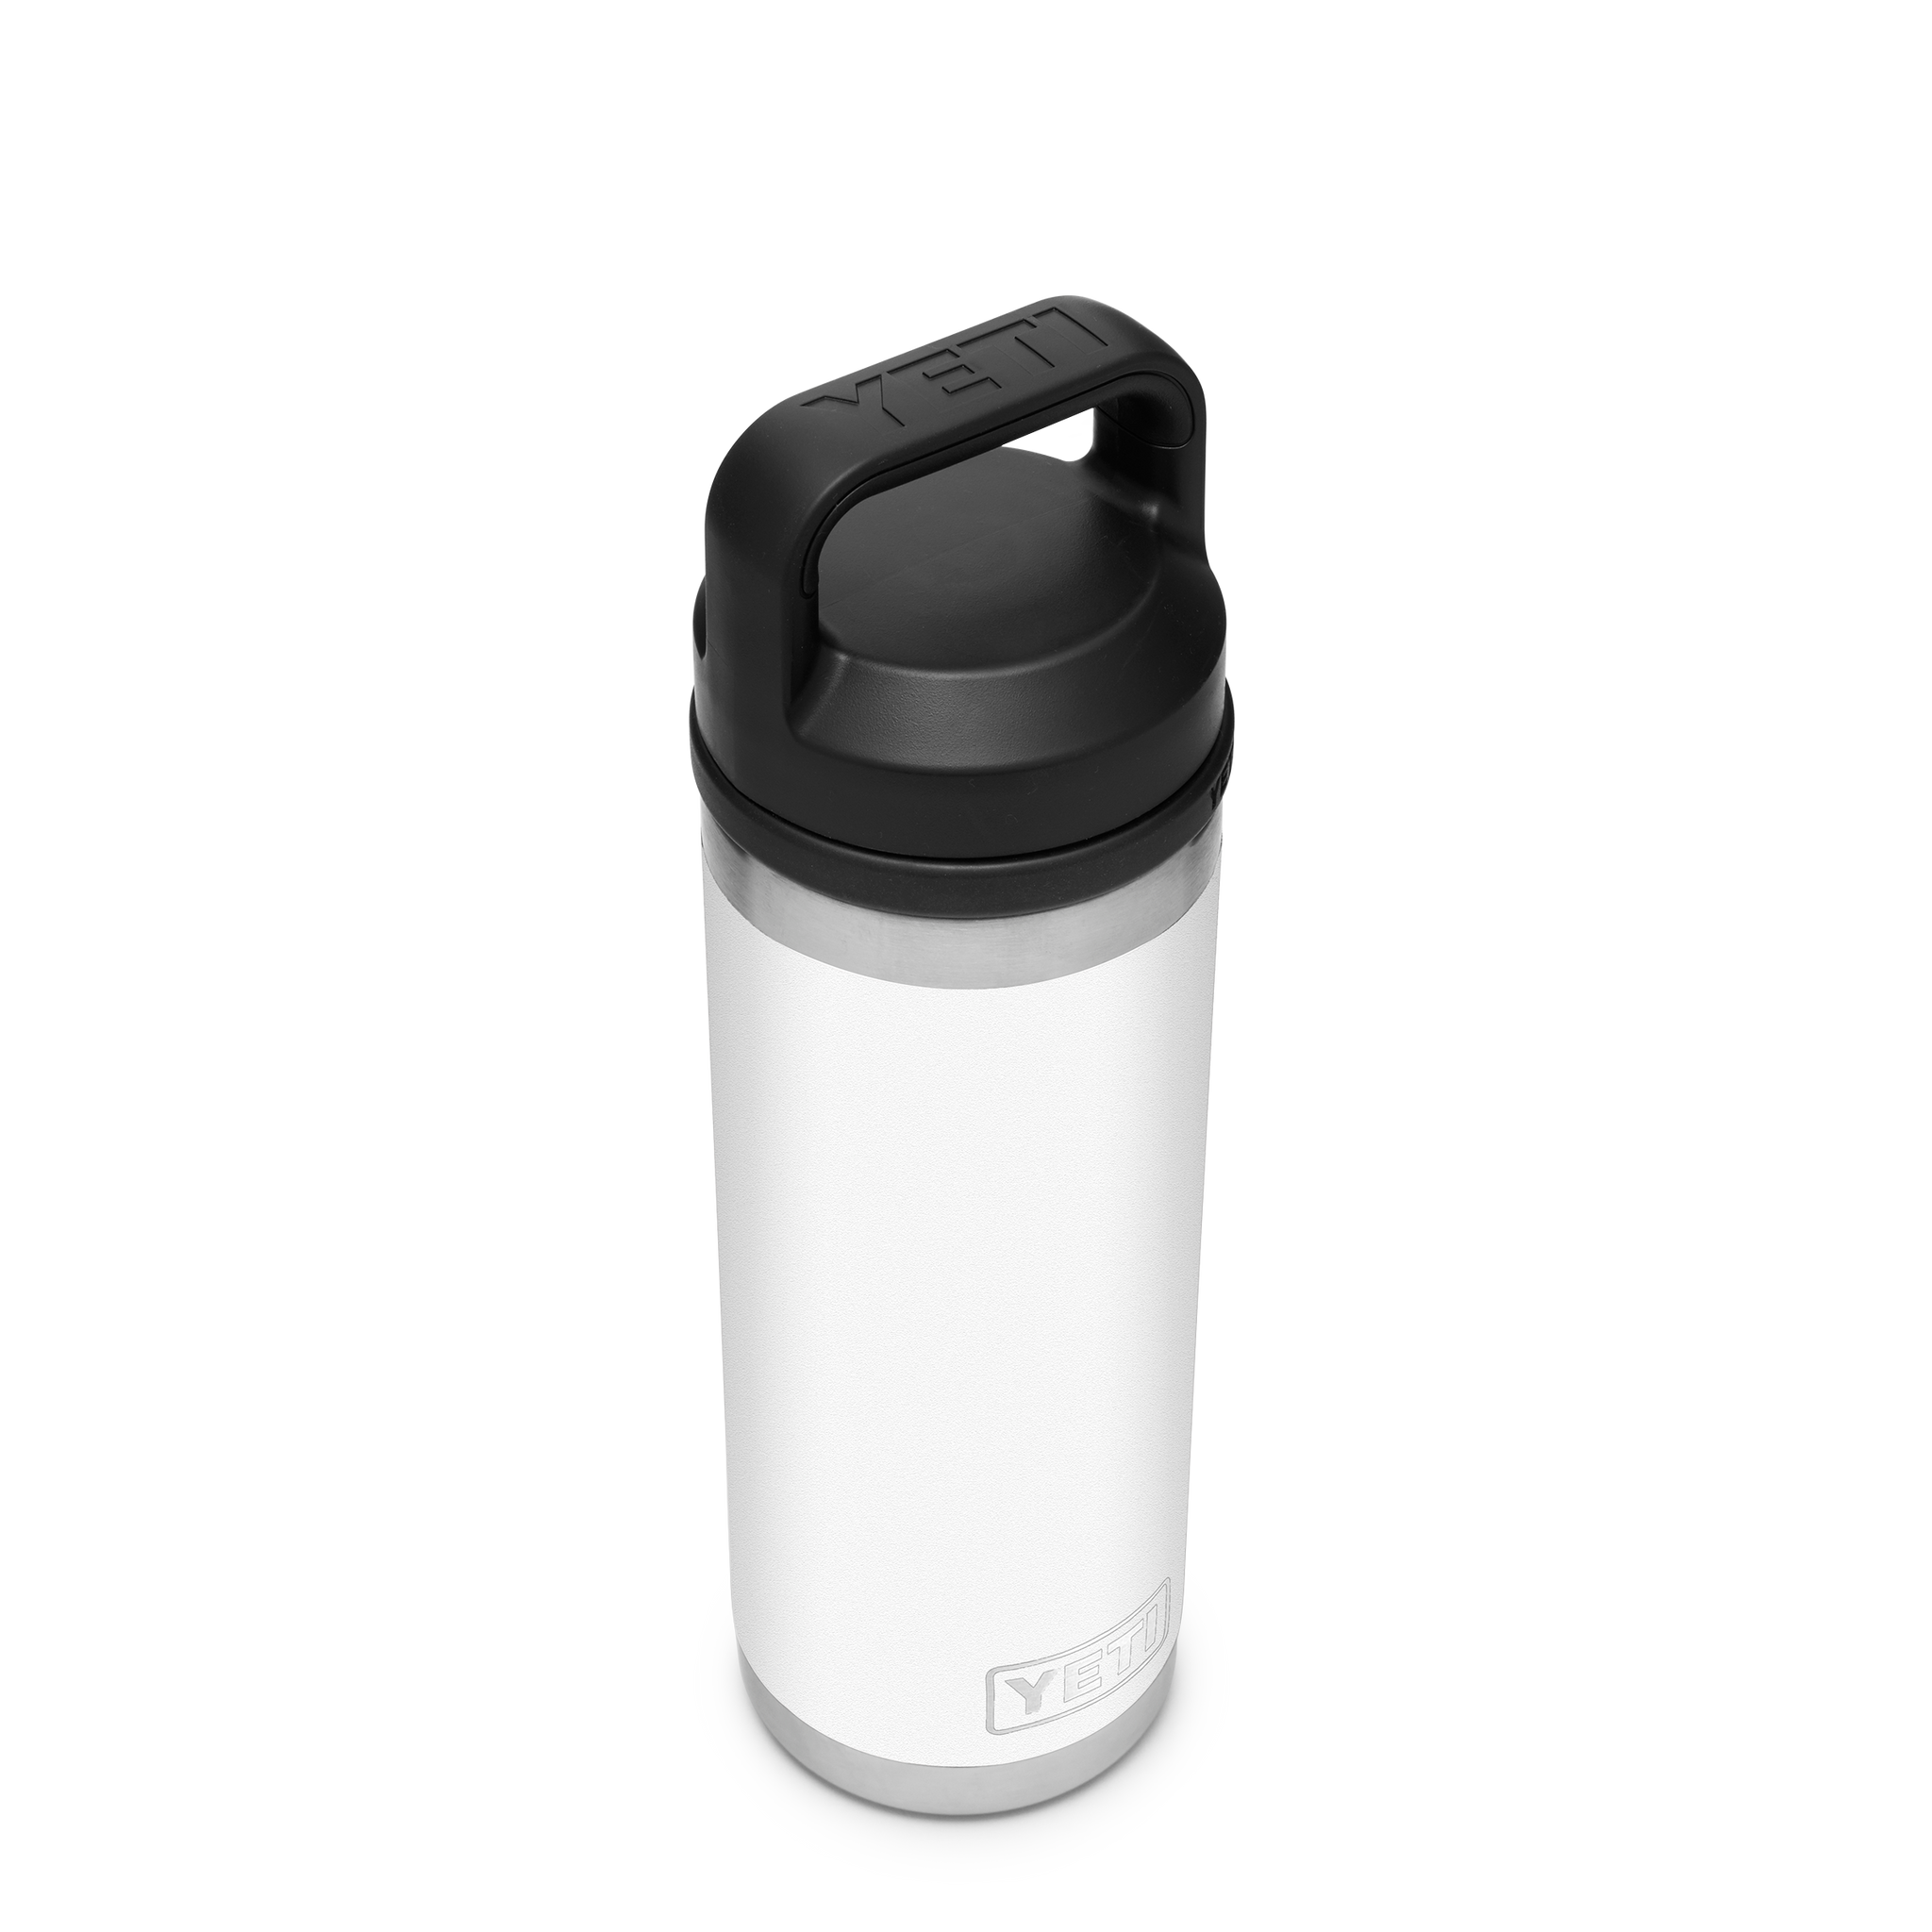 YETI Rambler 18 oz Bottle with Chug Cap - Black